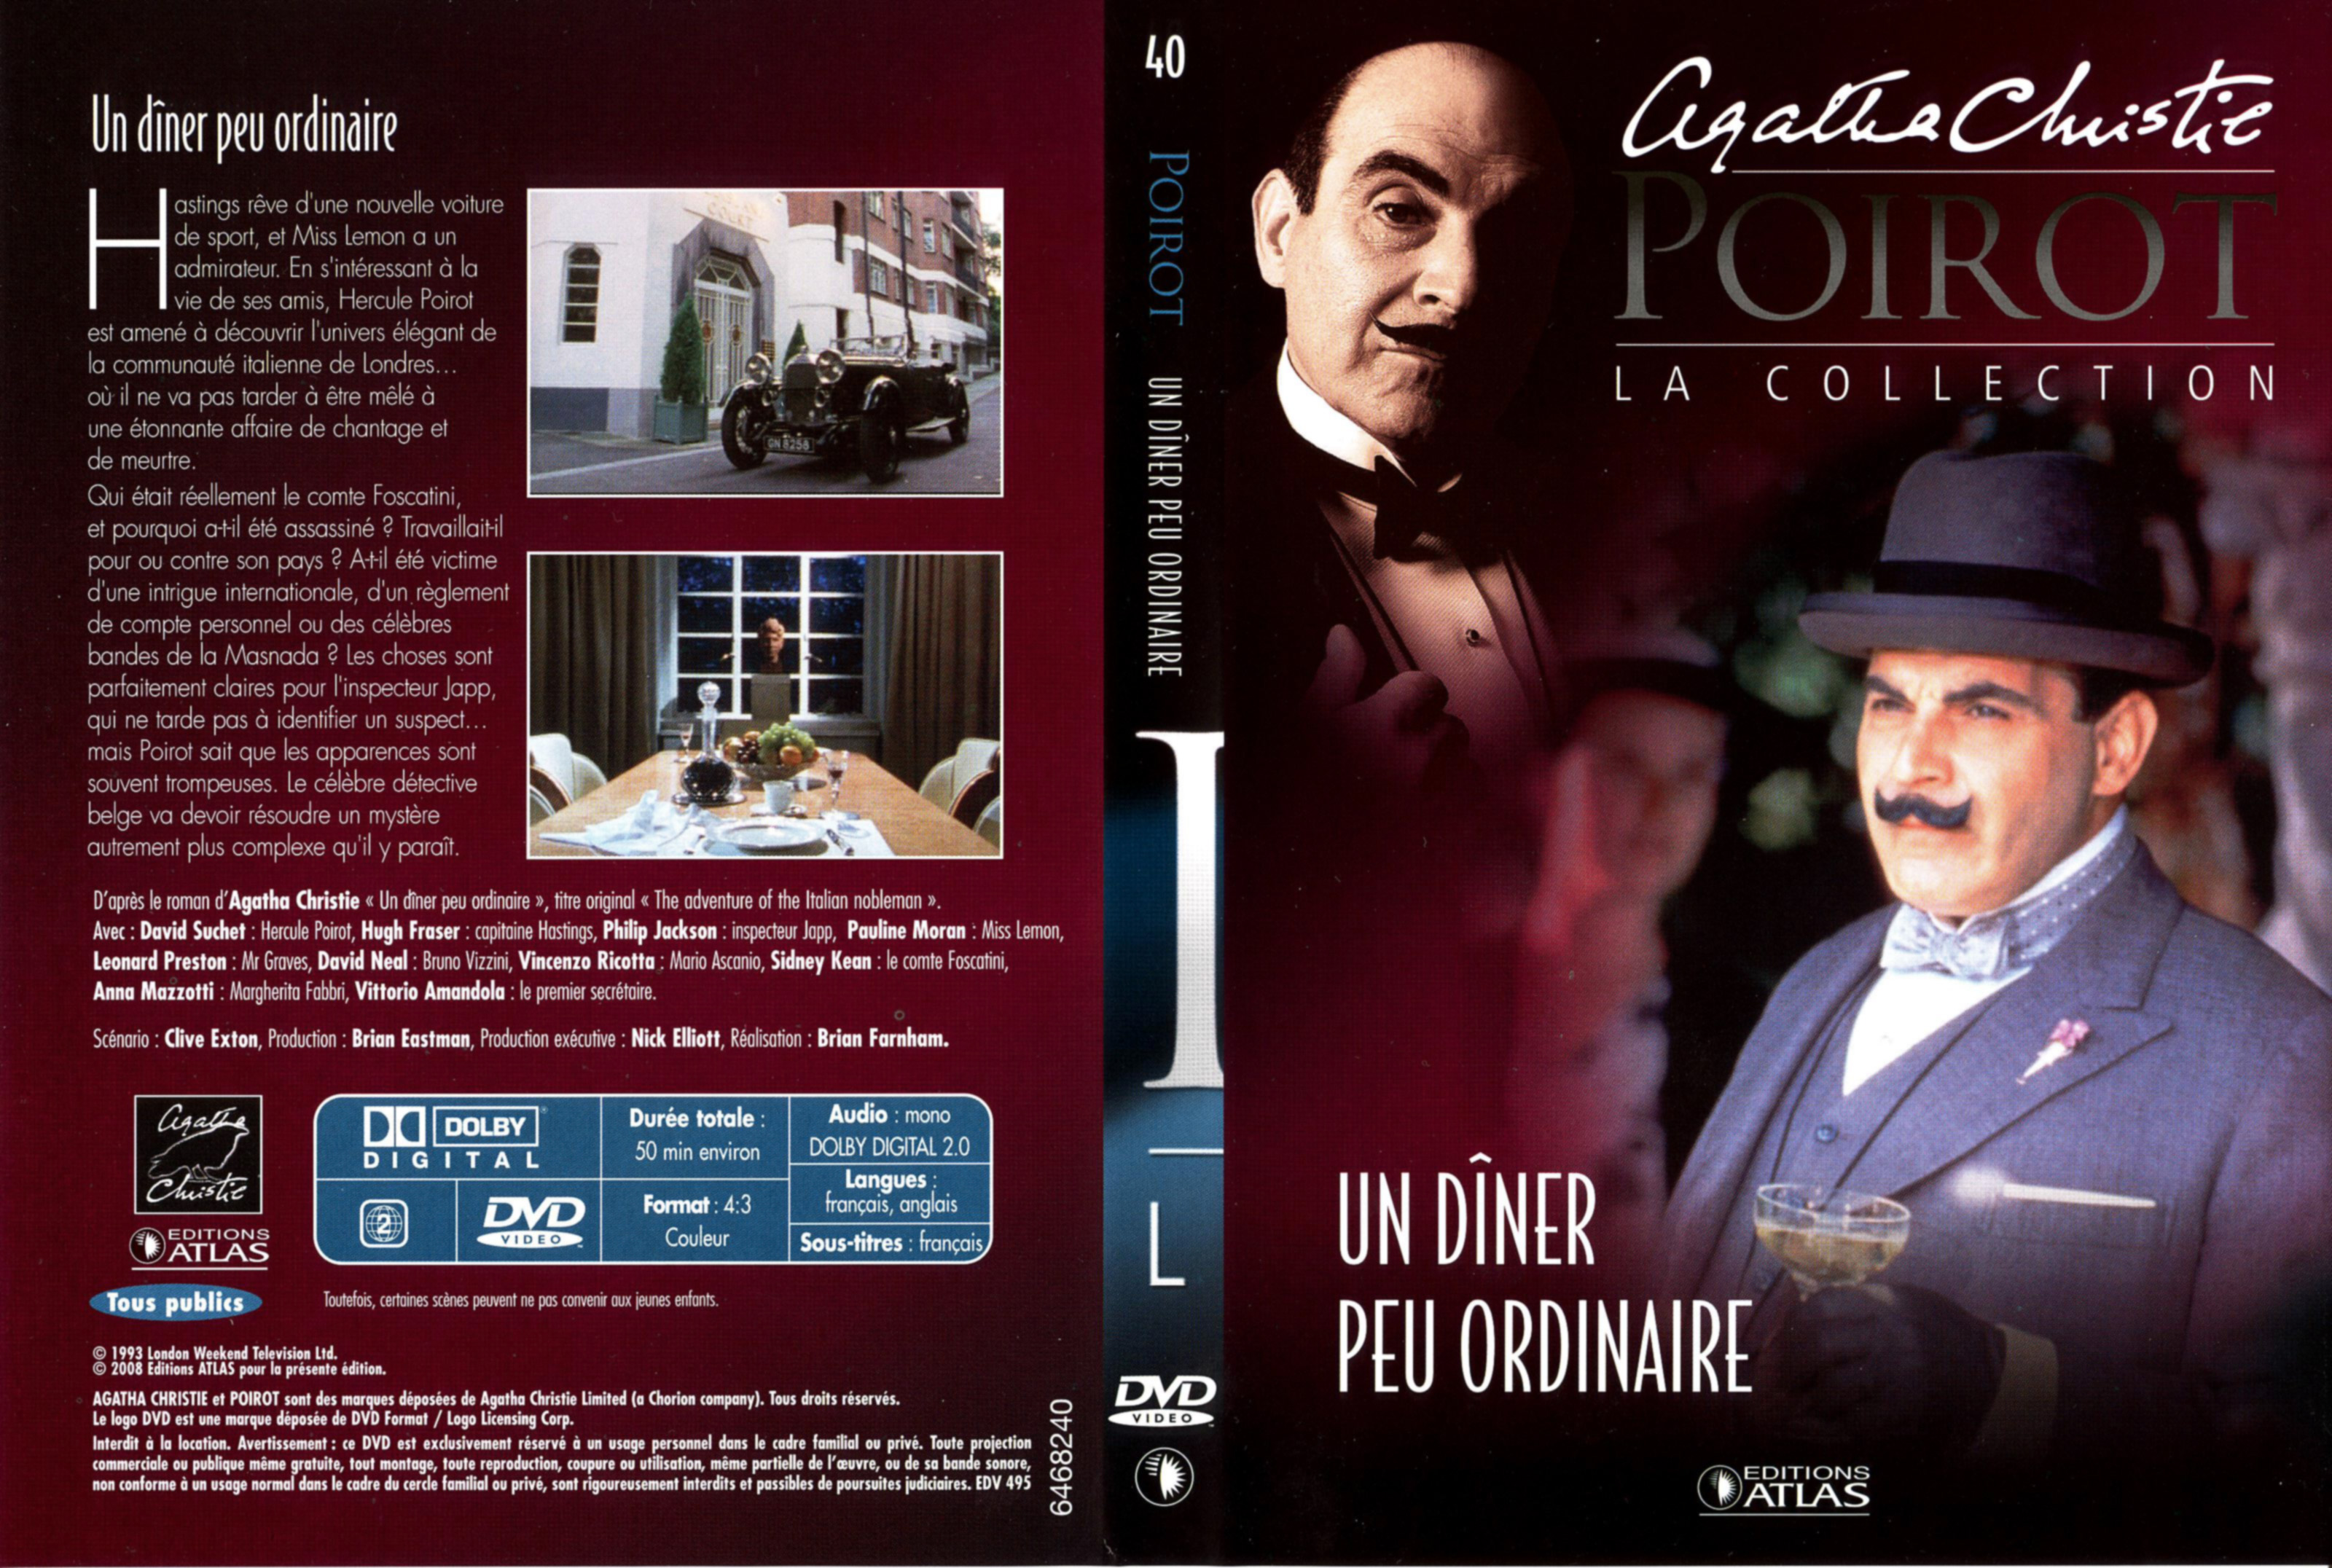 Jaquette DVD Hercule Poirot vol 40